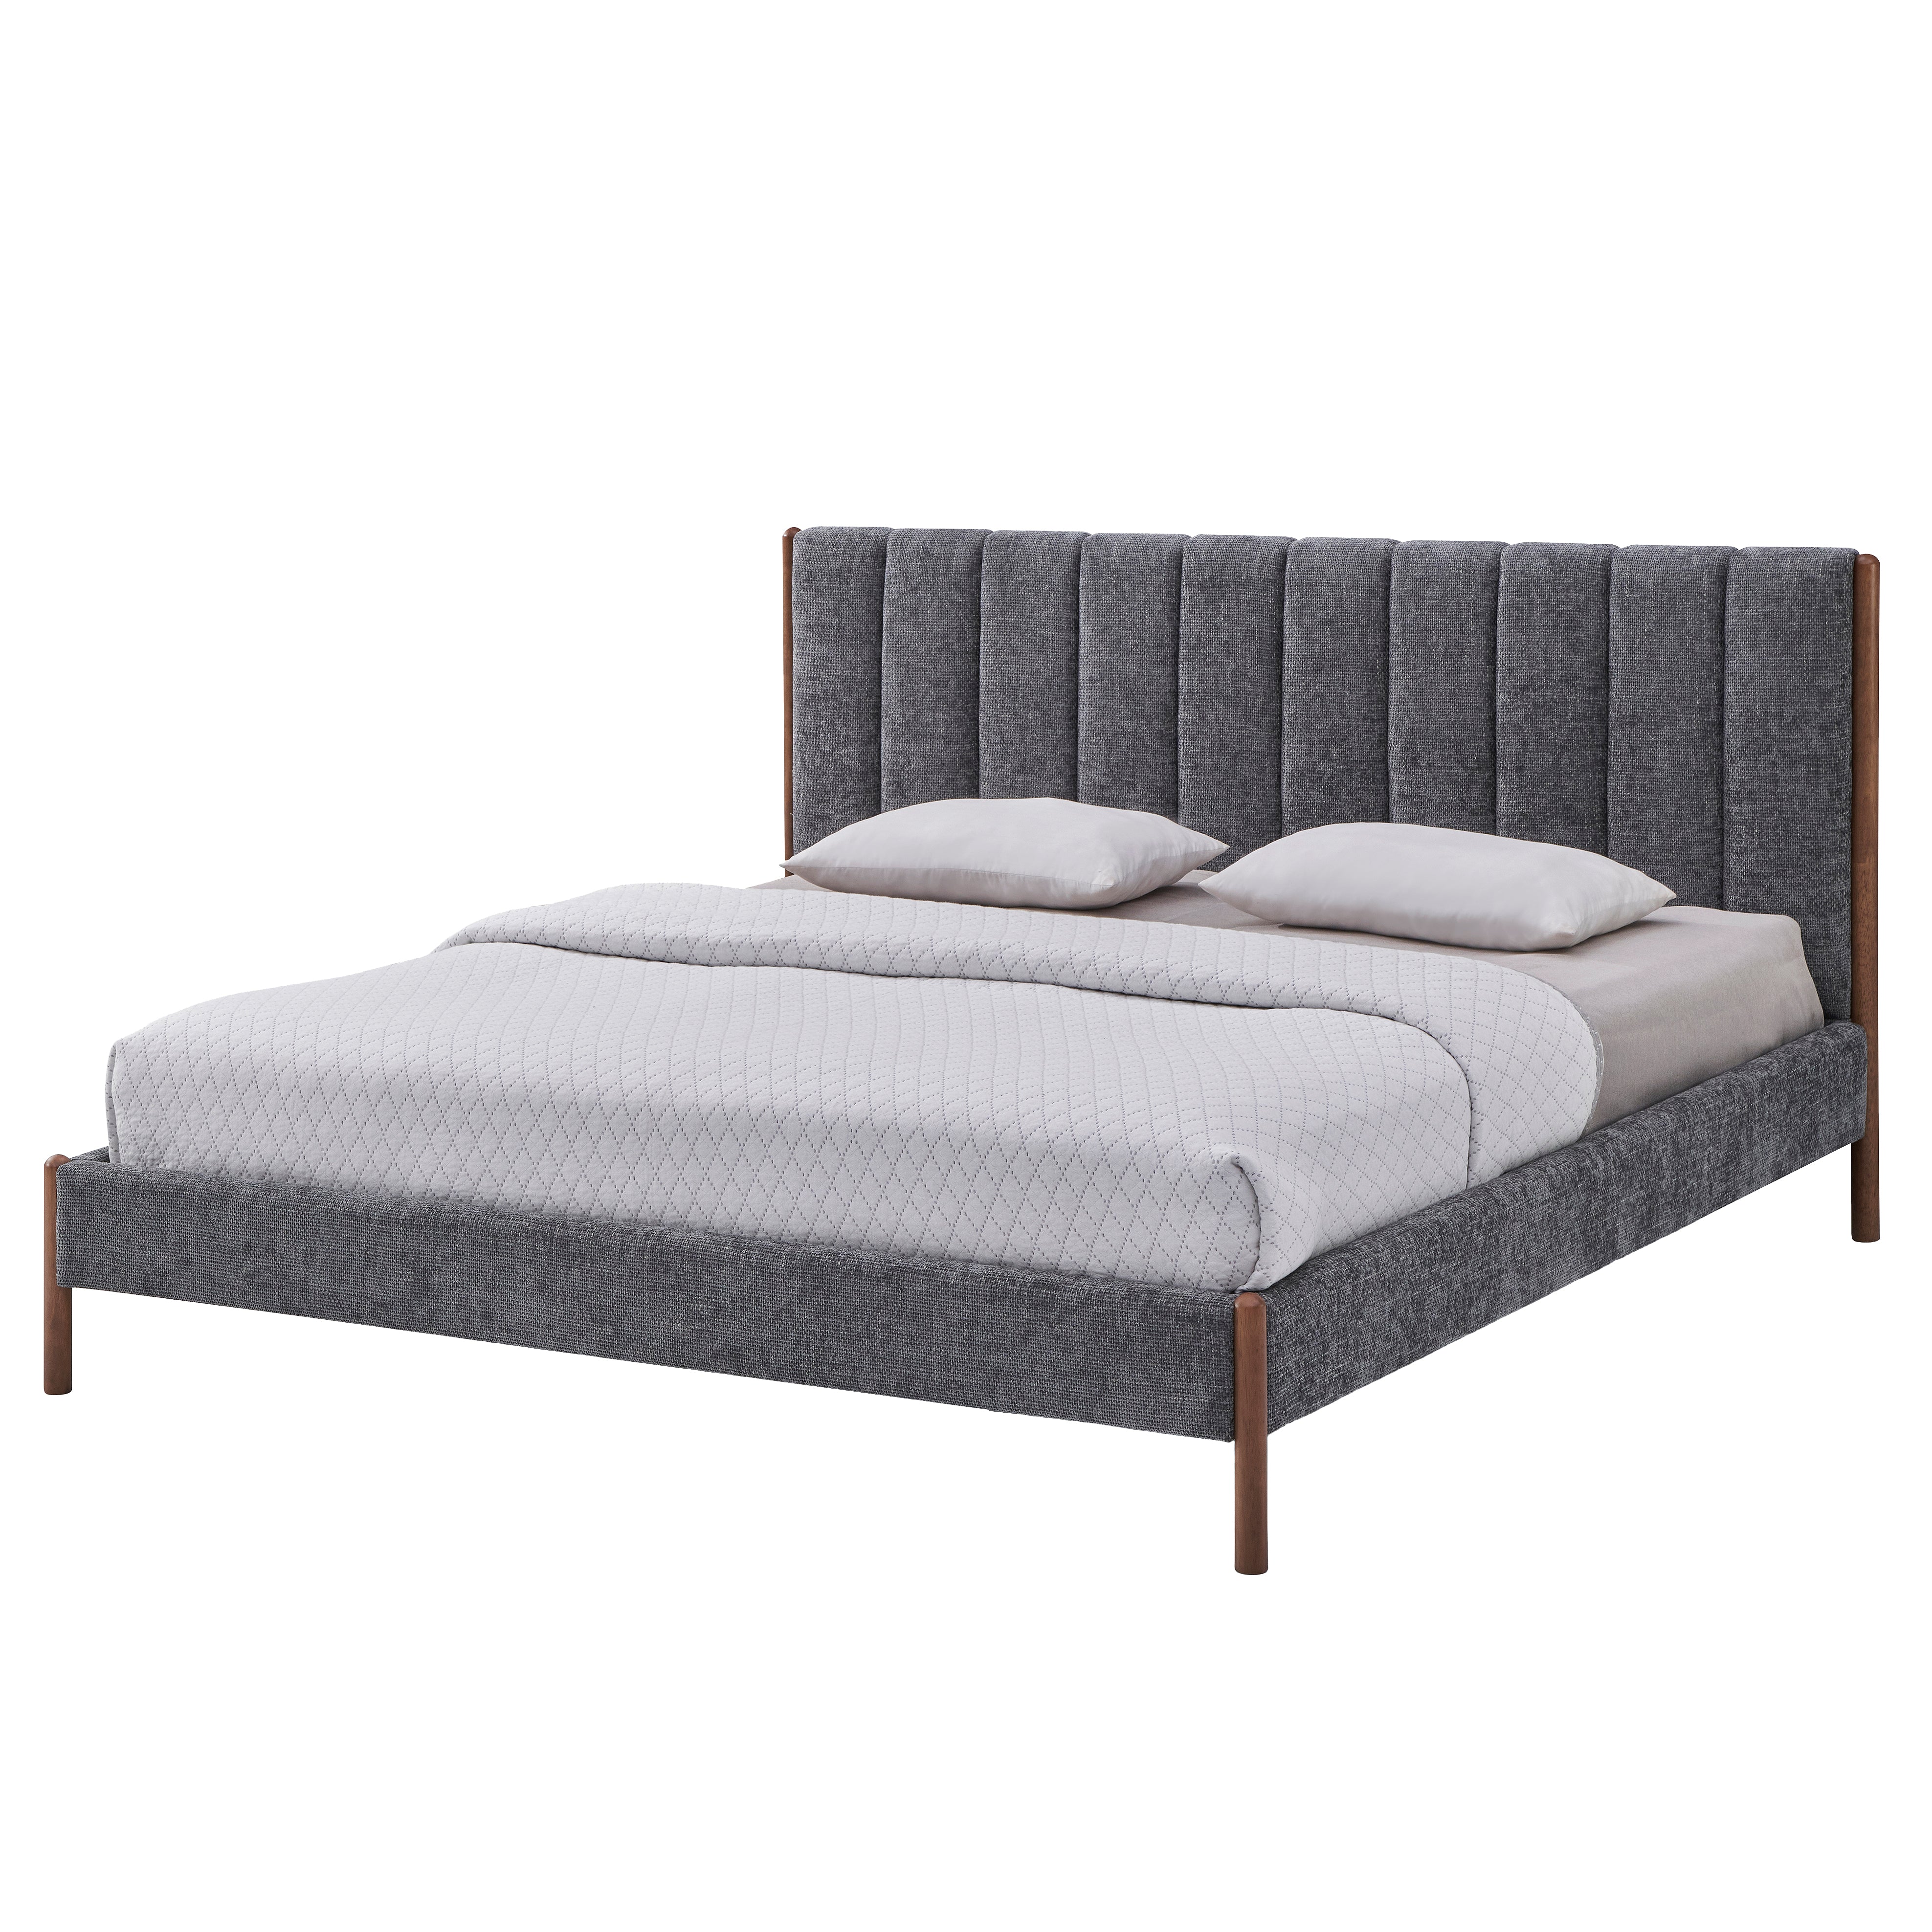 Exton Upholstered Platform King Bed, Dark Gray